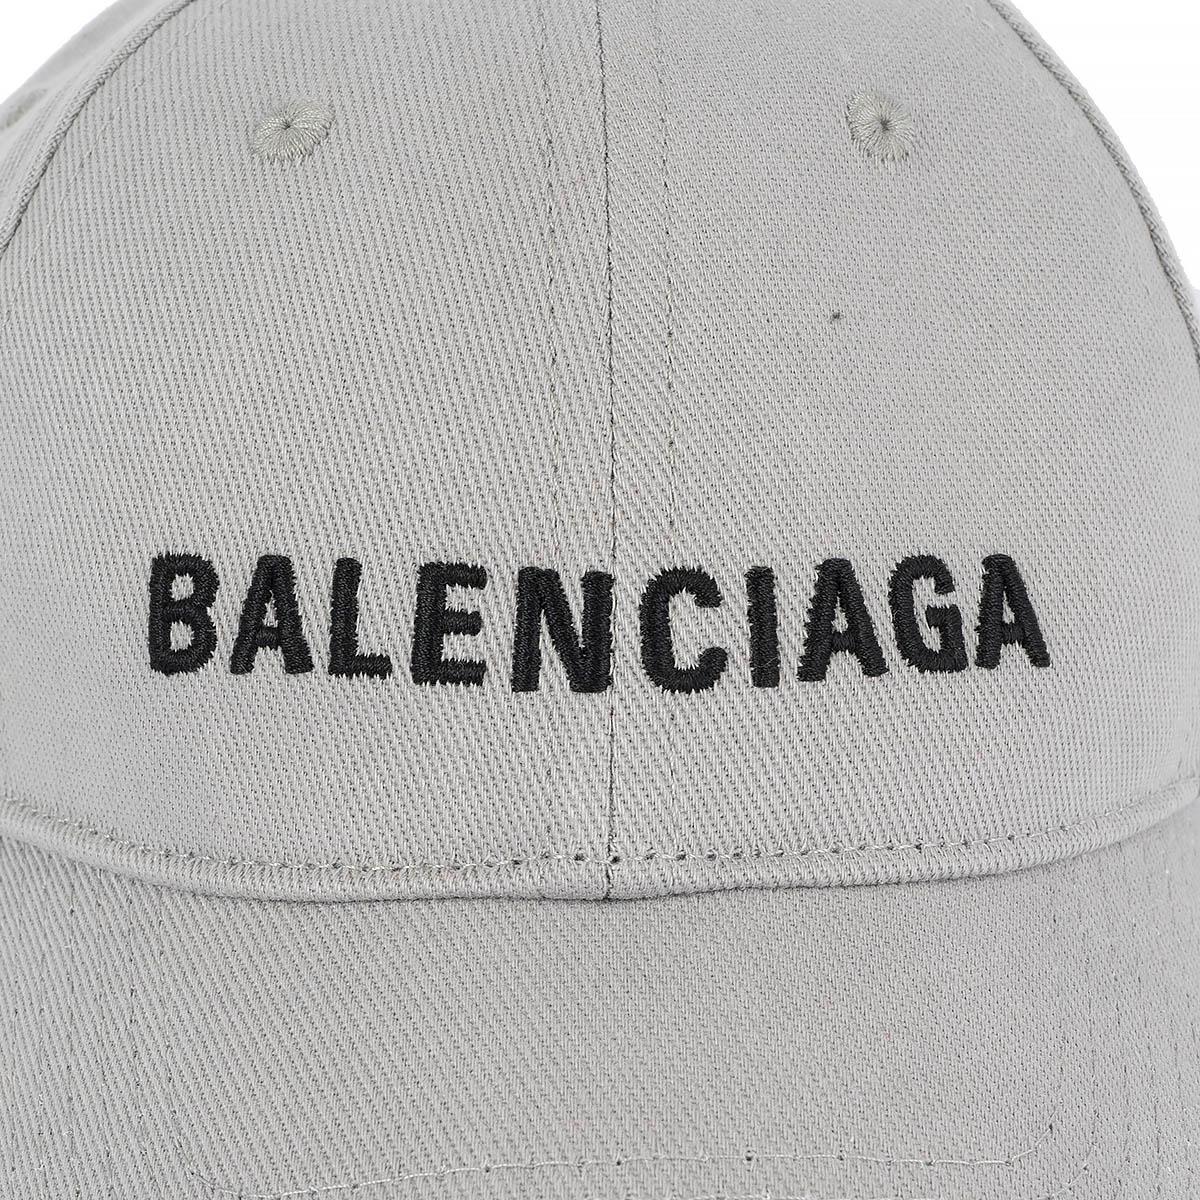 BALENCIAGA grey cotton LOGO Baseball Cap Hat L 59 For Sale 2